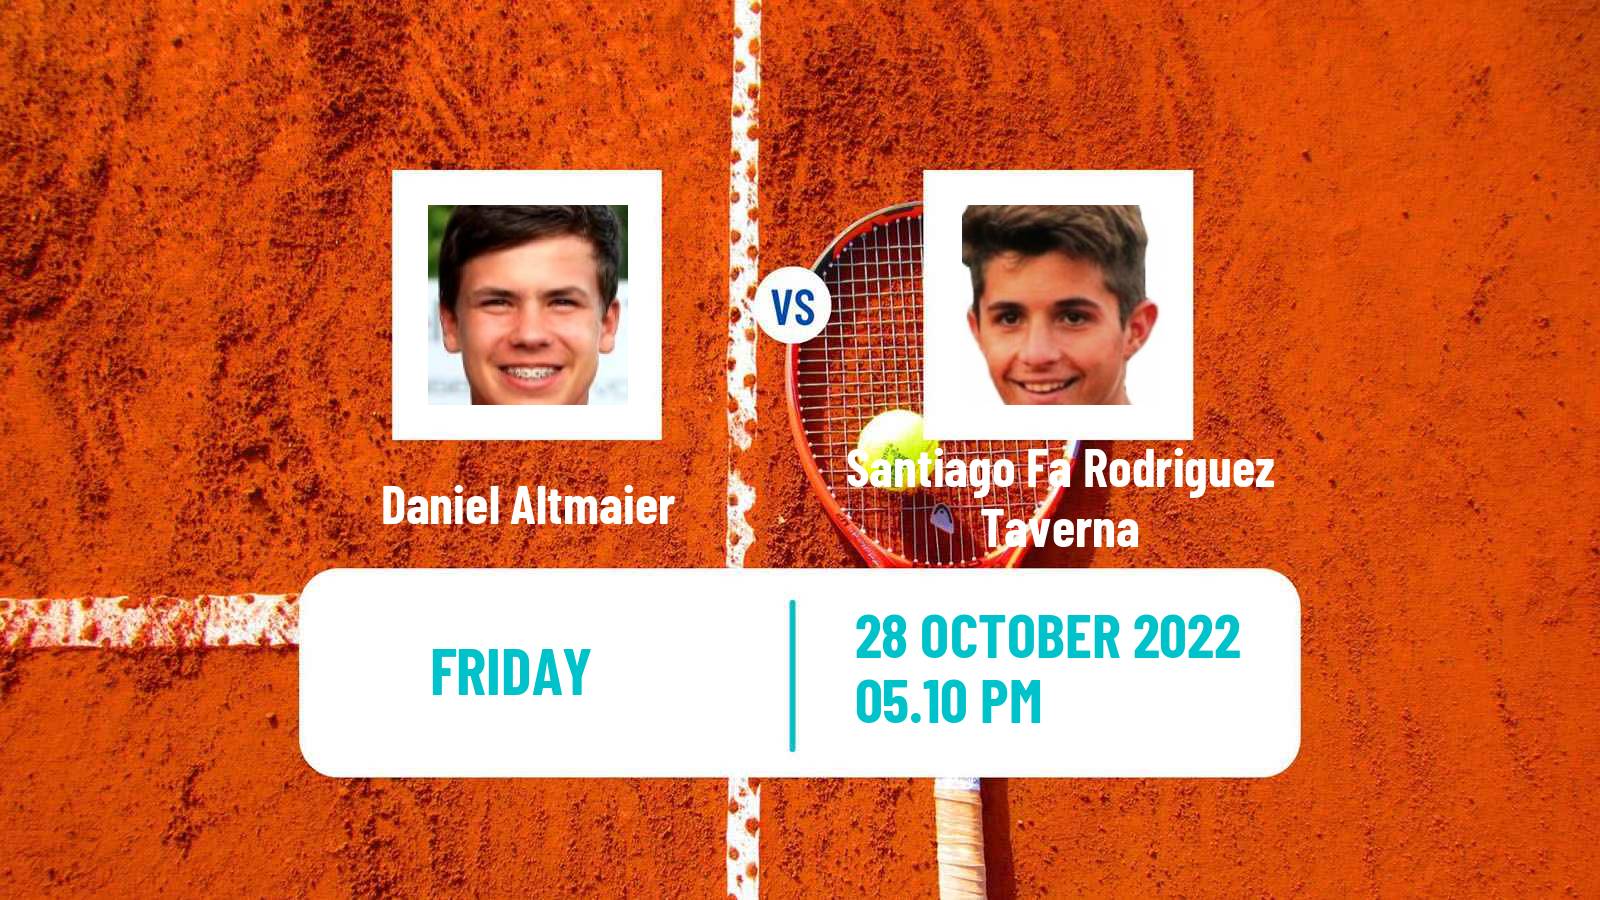 Tennis ATP Challenger Daniel Altmaier - Santiago Fa Rodriguez Taverna